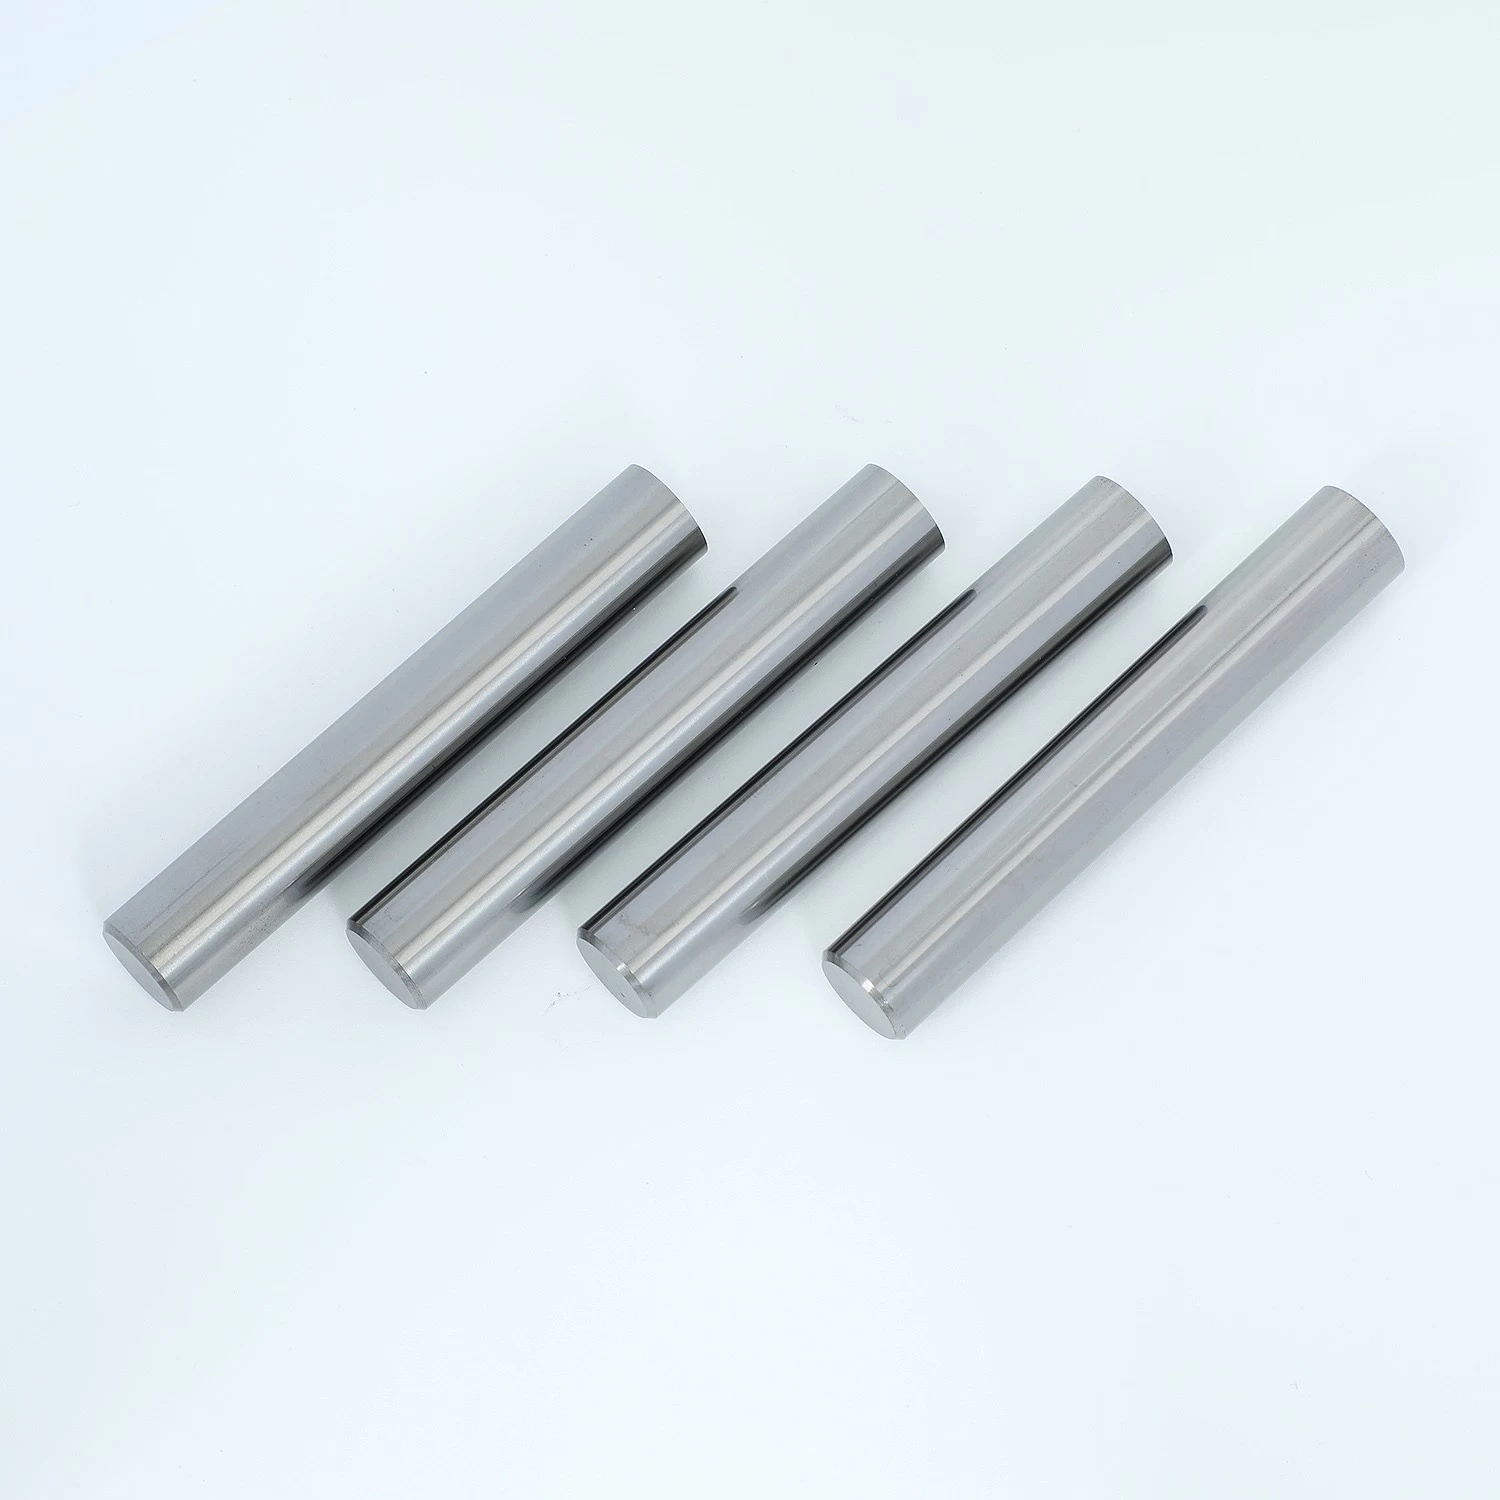 Super Hard Tungsten Cemented Carbide Round Bar for Drill Bits - COPY - dcl7vs